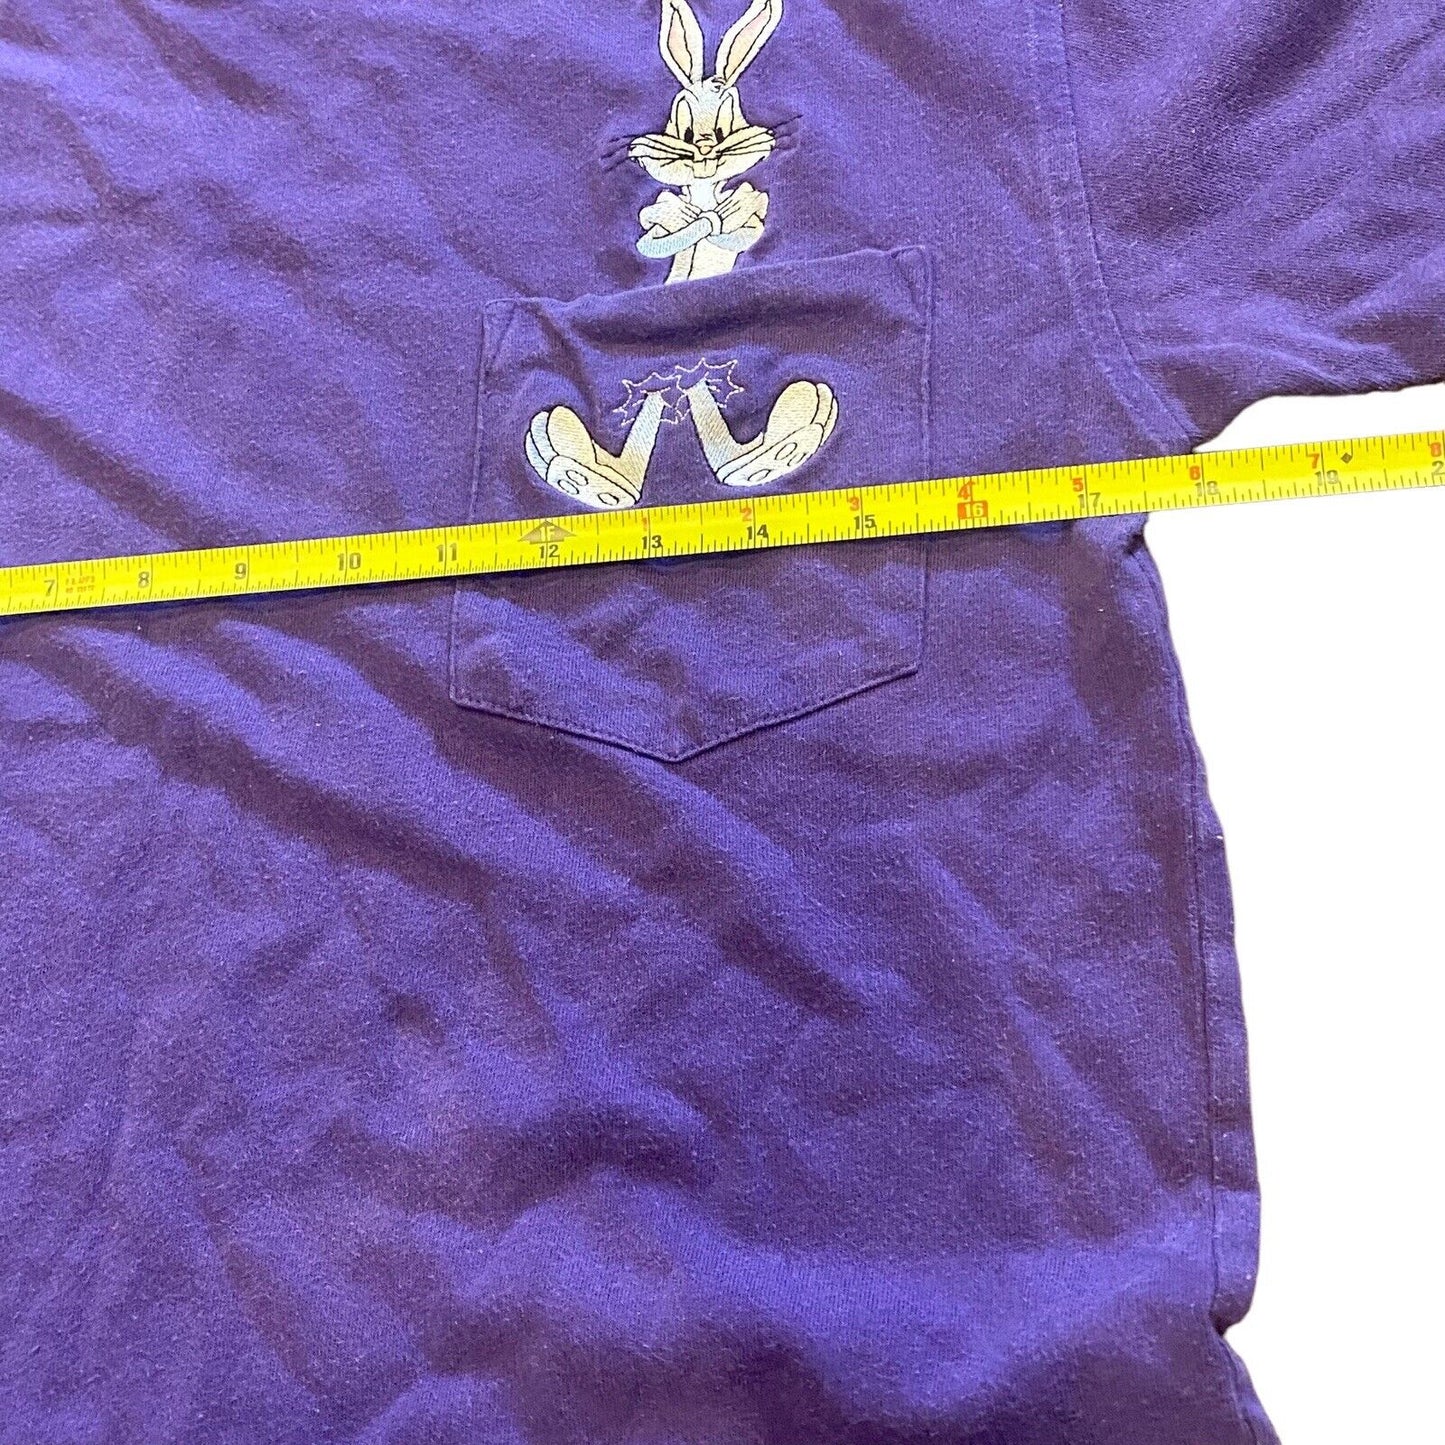 VTG Bugs Bunny Warner Bros Studios Size XS Embroidered Pocket Tee